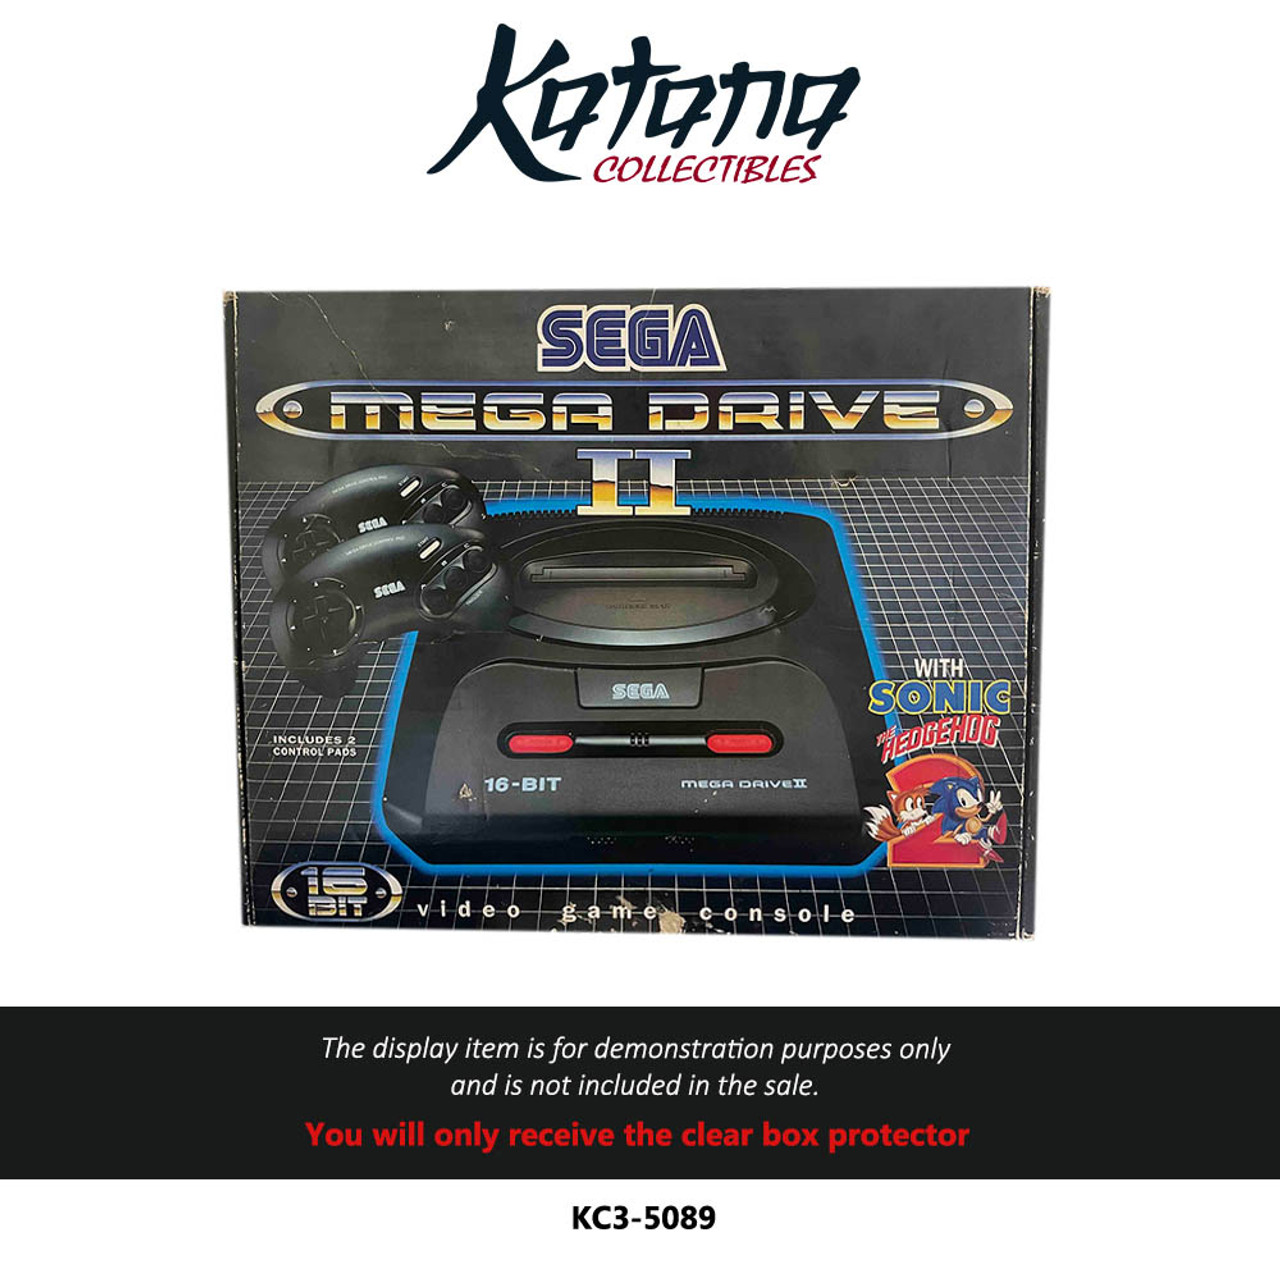 Katana Collectibles Protector For Sega Mega Drive 2 Console Box